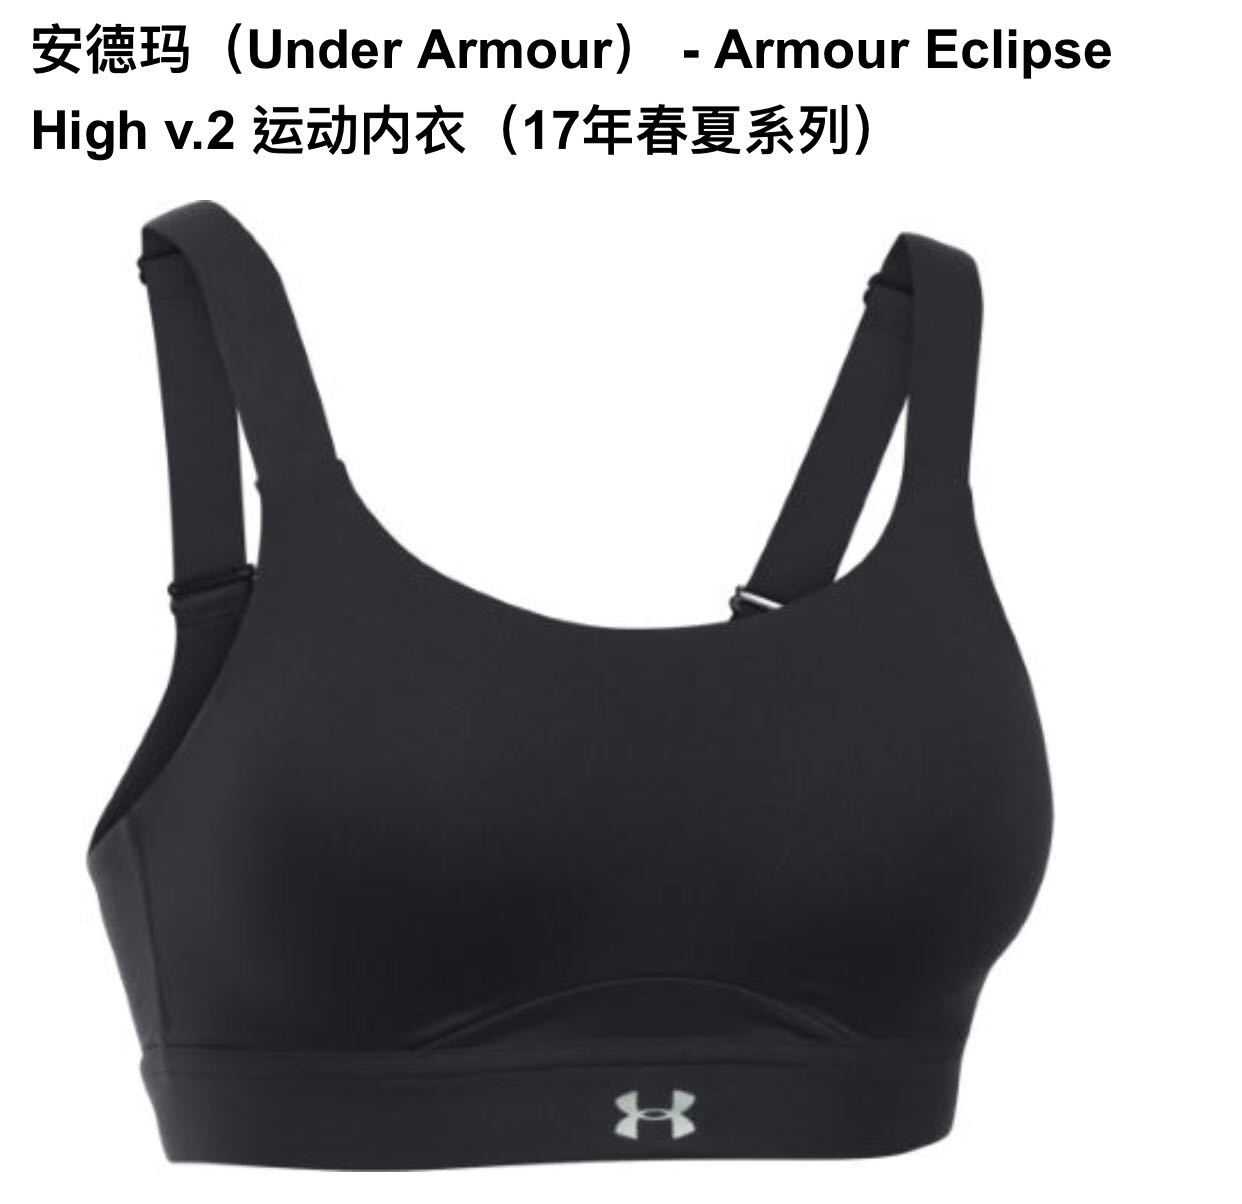 Under Armour Eclipse 高强度支撑跑步减震可调节带胸垫运动内衣